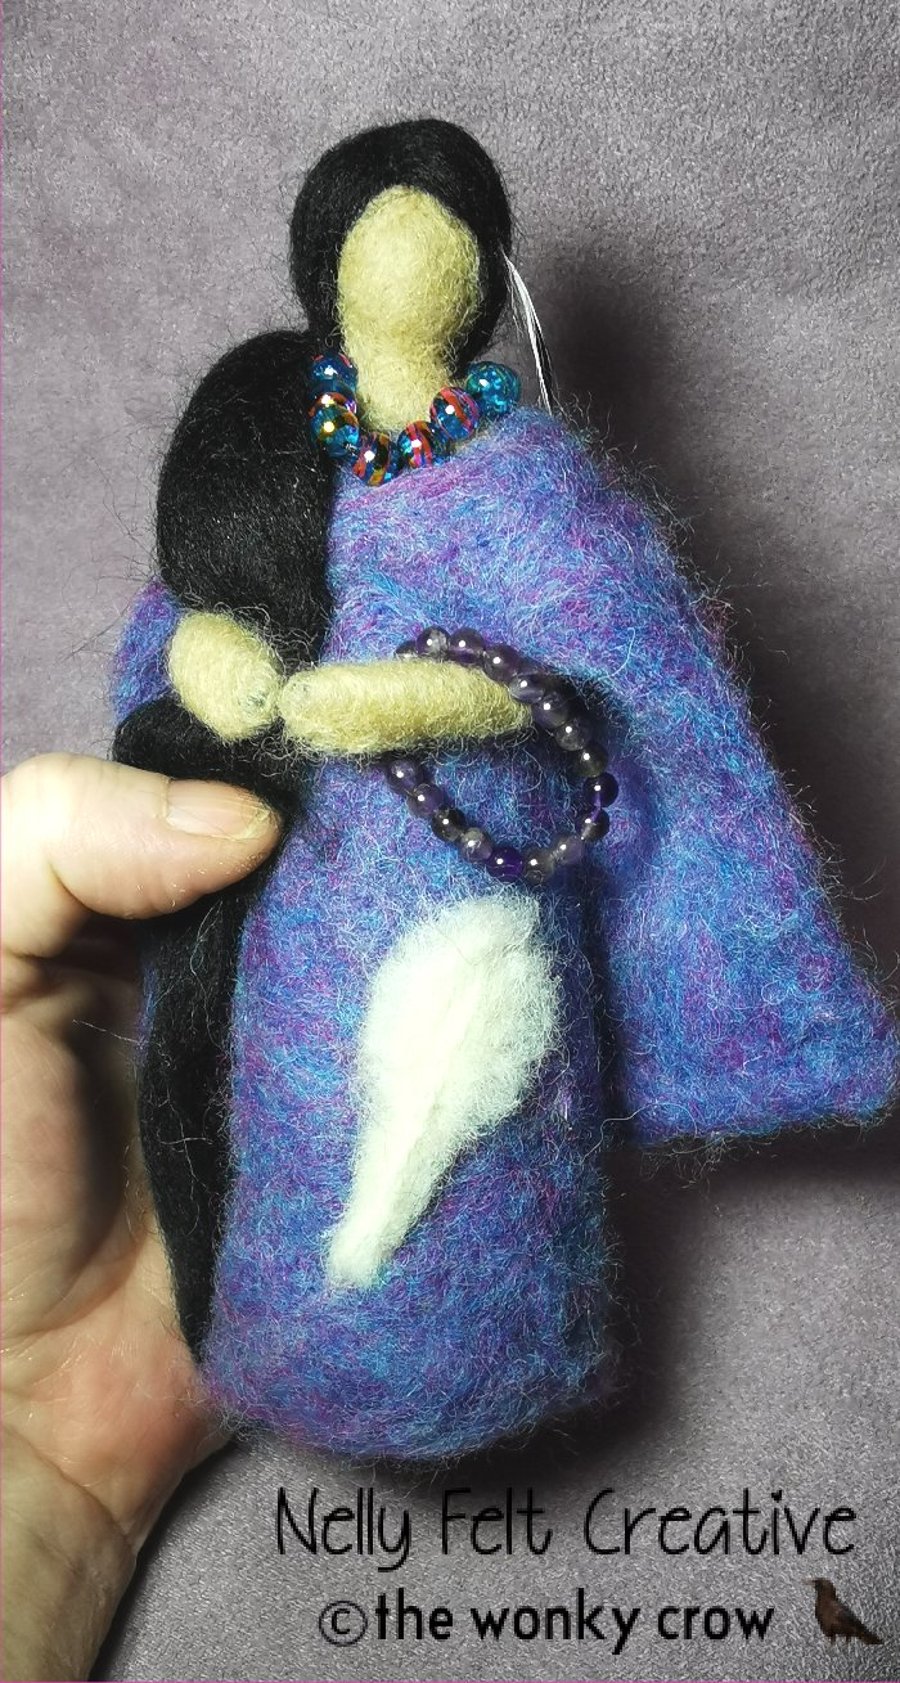 Native American Spirit Doll - Amethyst Healer 